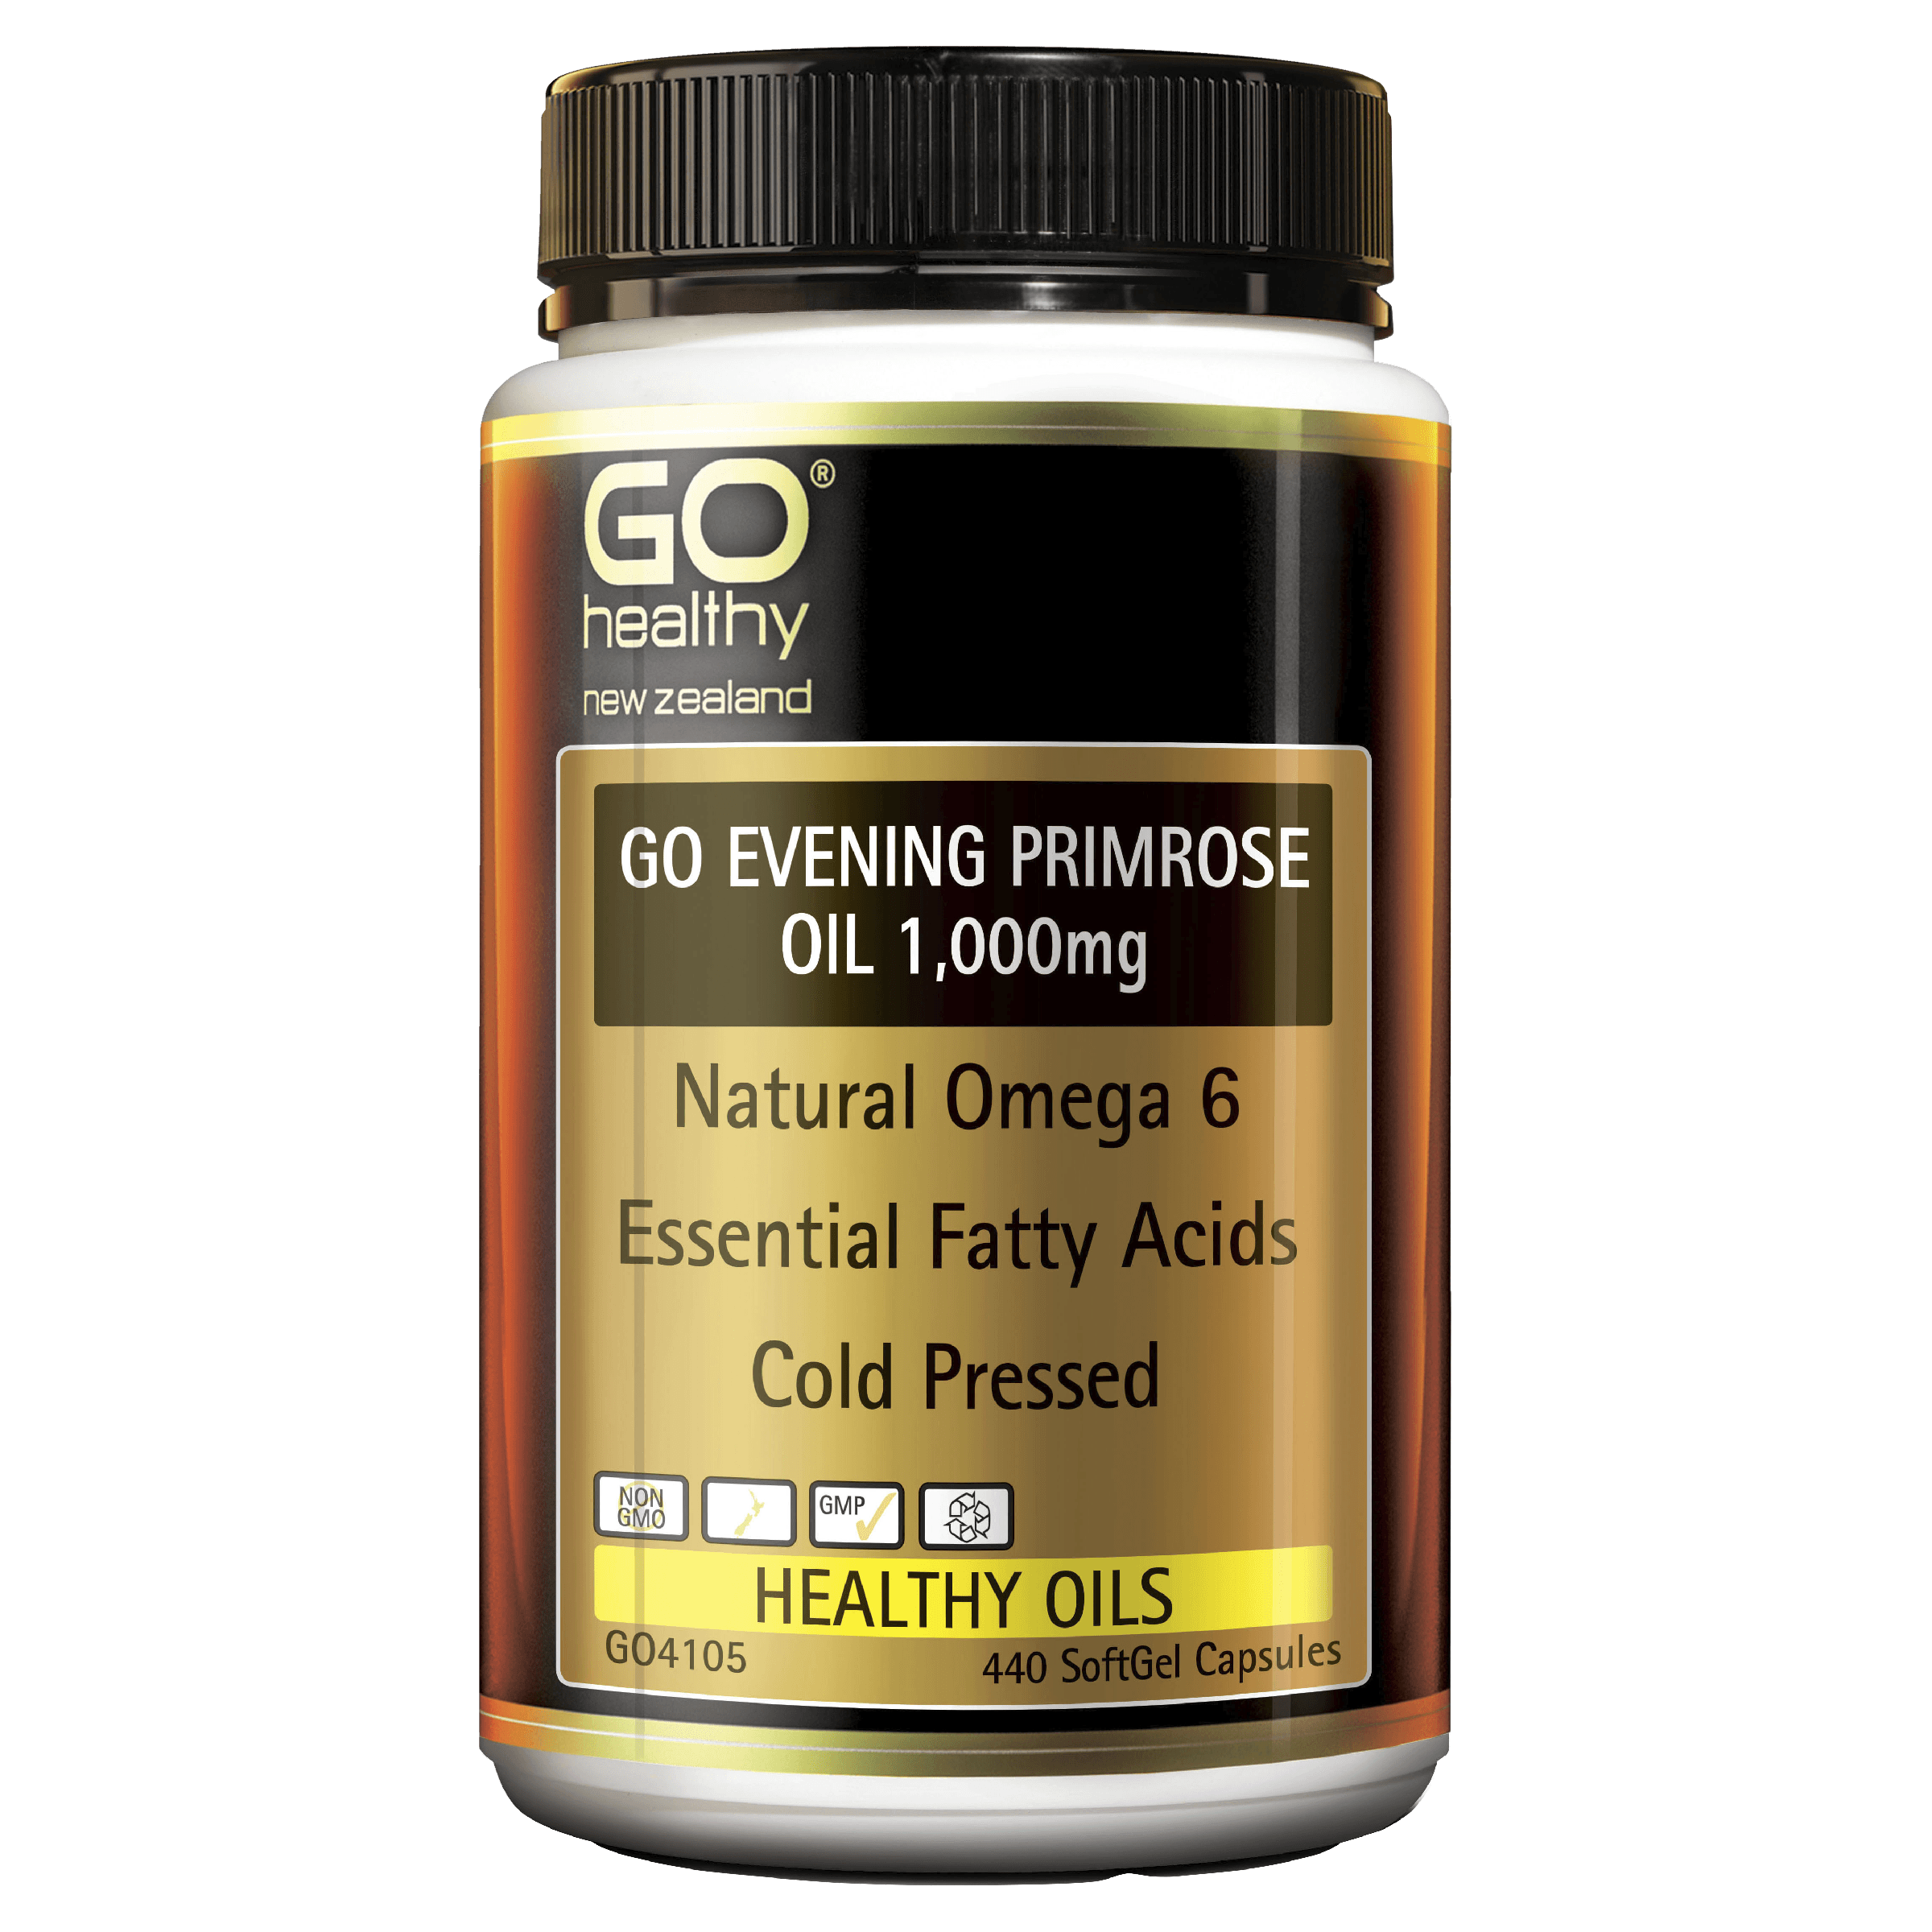 Go Healthy Go Evening Primrose Oil 1,000mg